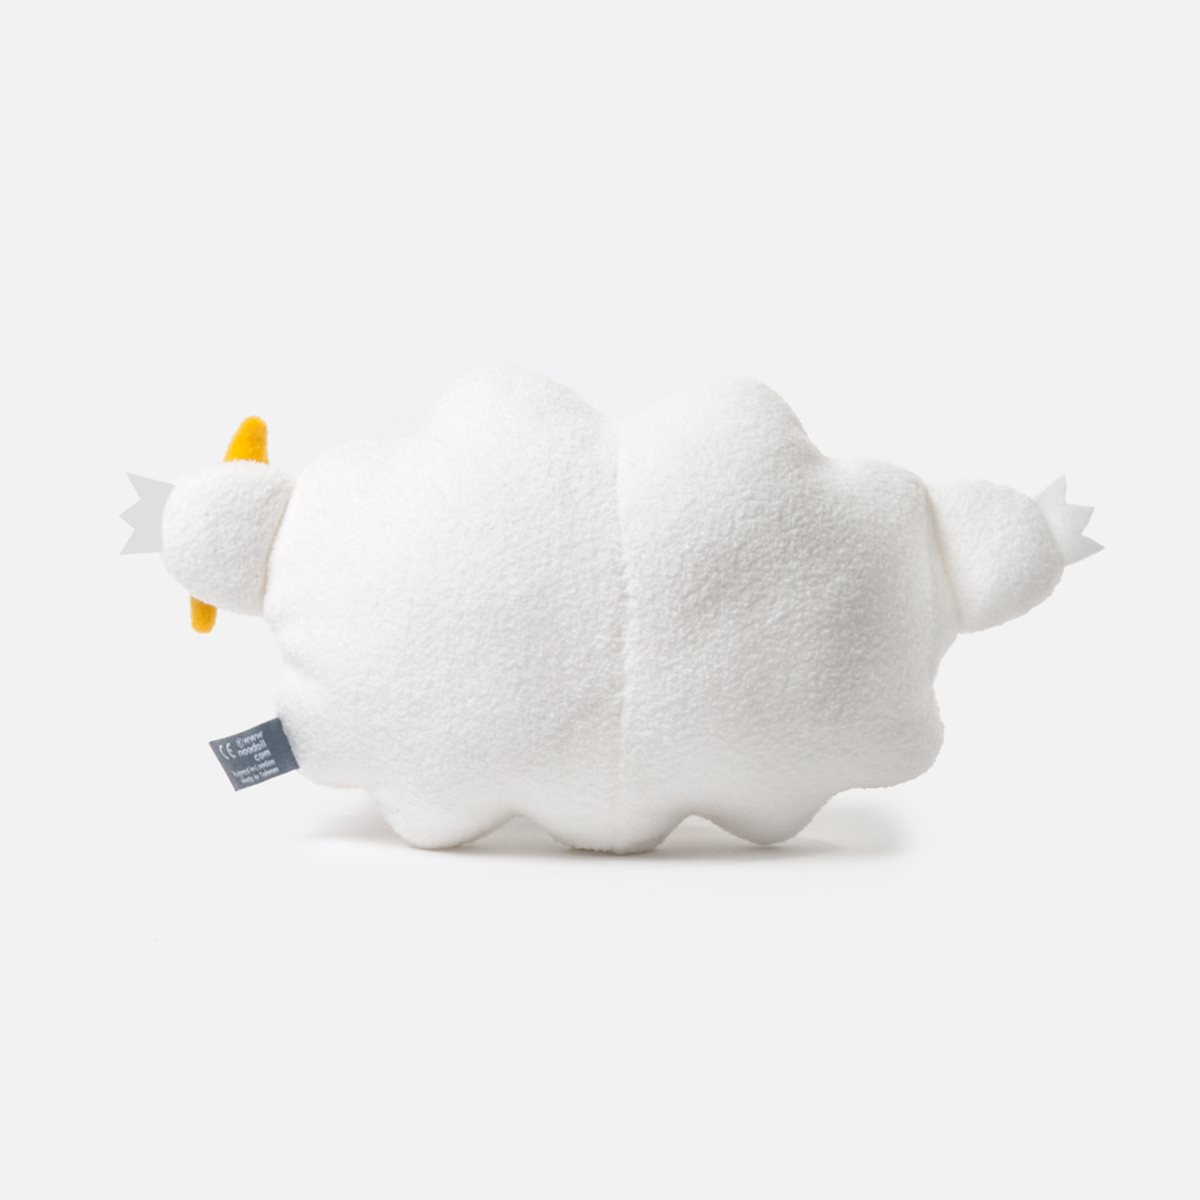 White Cloud Plush Toy Ricestorm - Noodoll